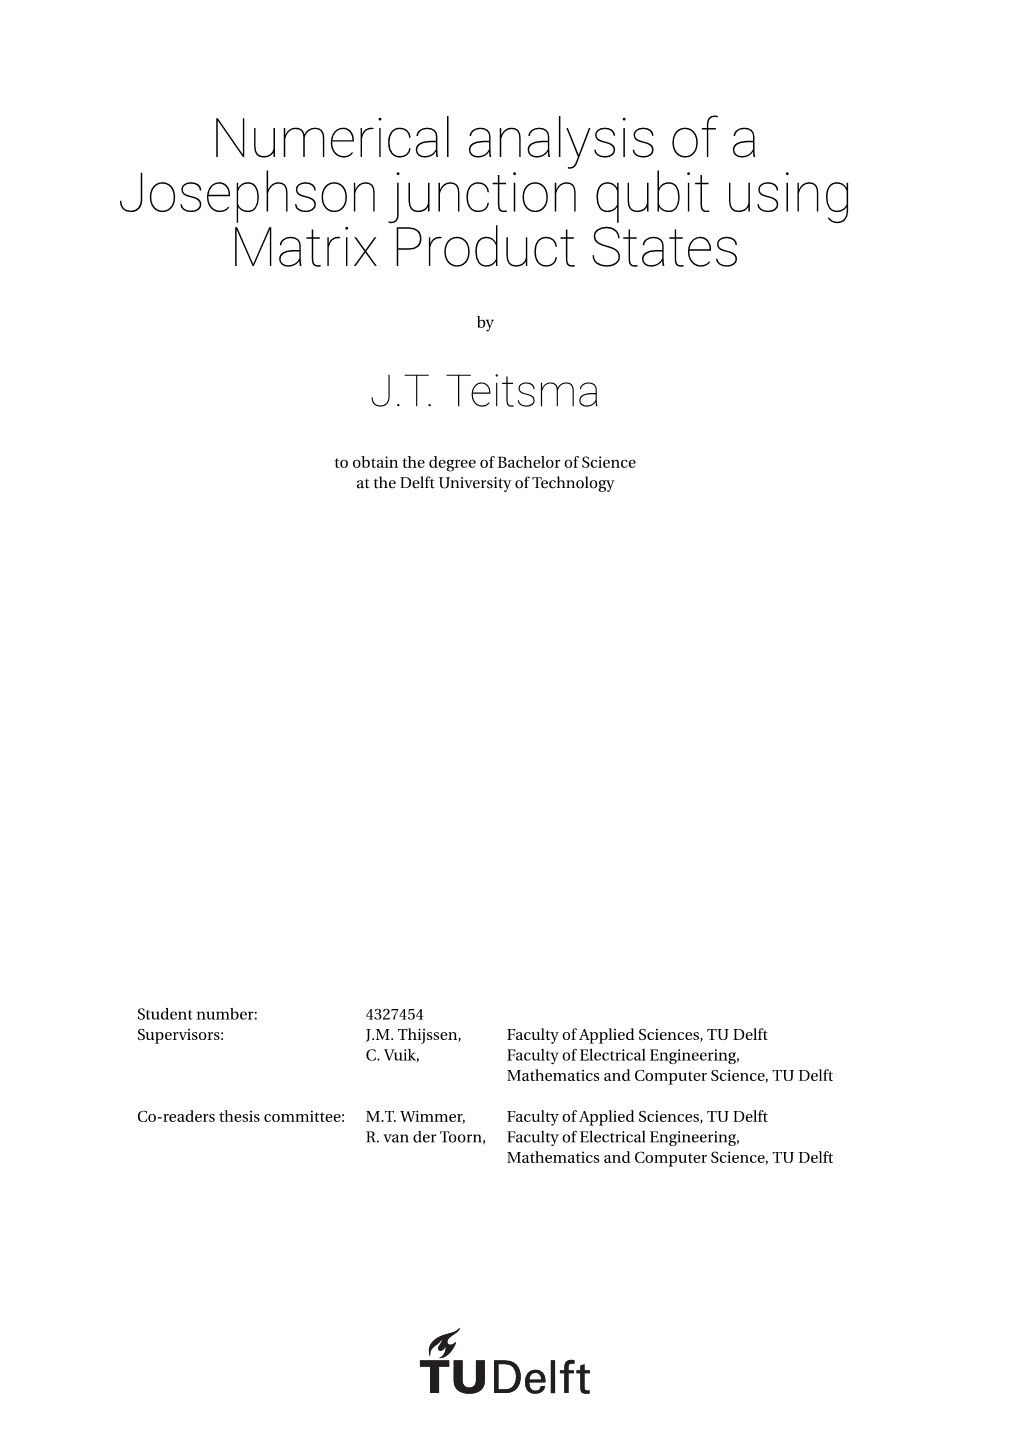 Numerical Analysis of a Josephson Junction Qubit Using Matrix Product States